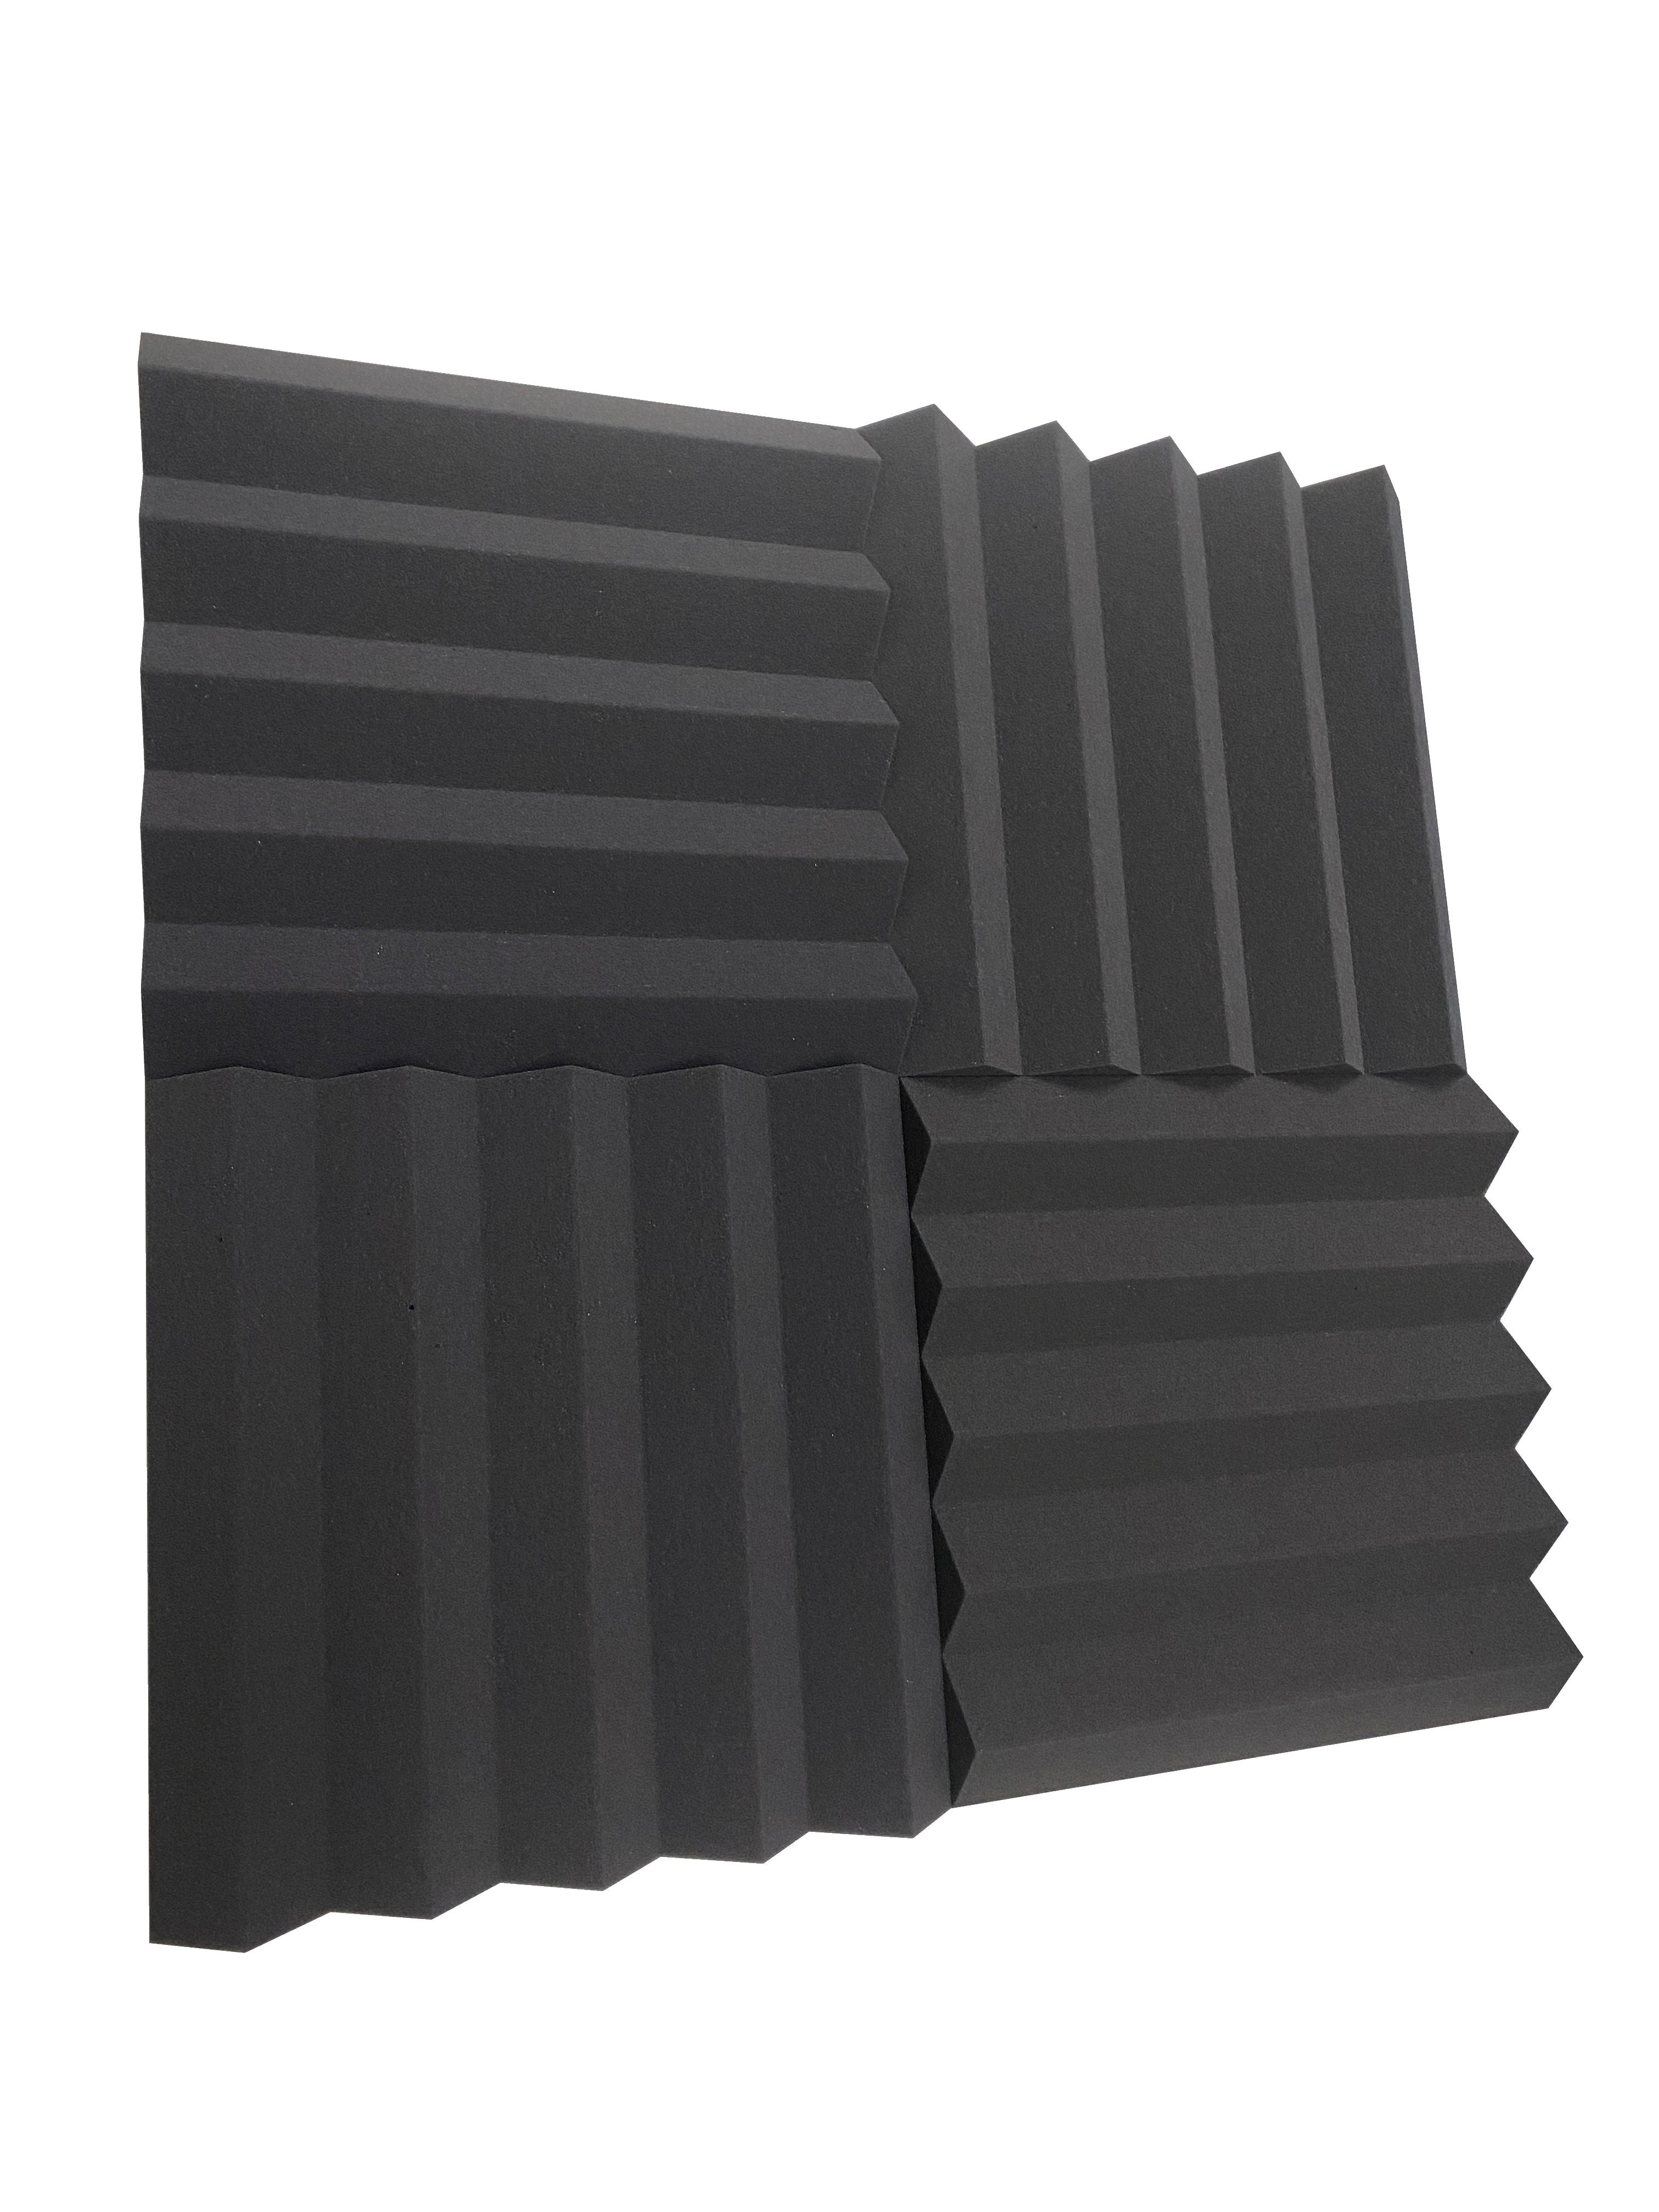 Wedge PRO Combo Acoustic Studio Foam Tile Kit